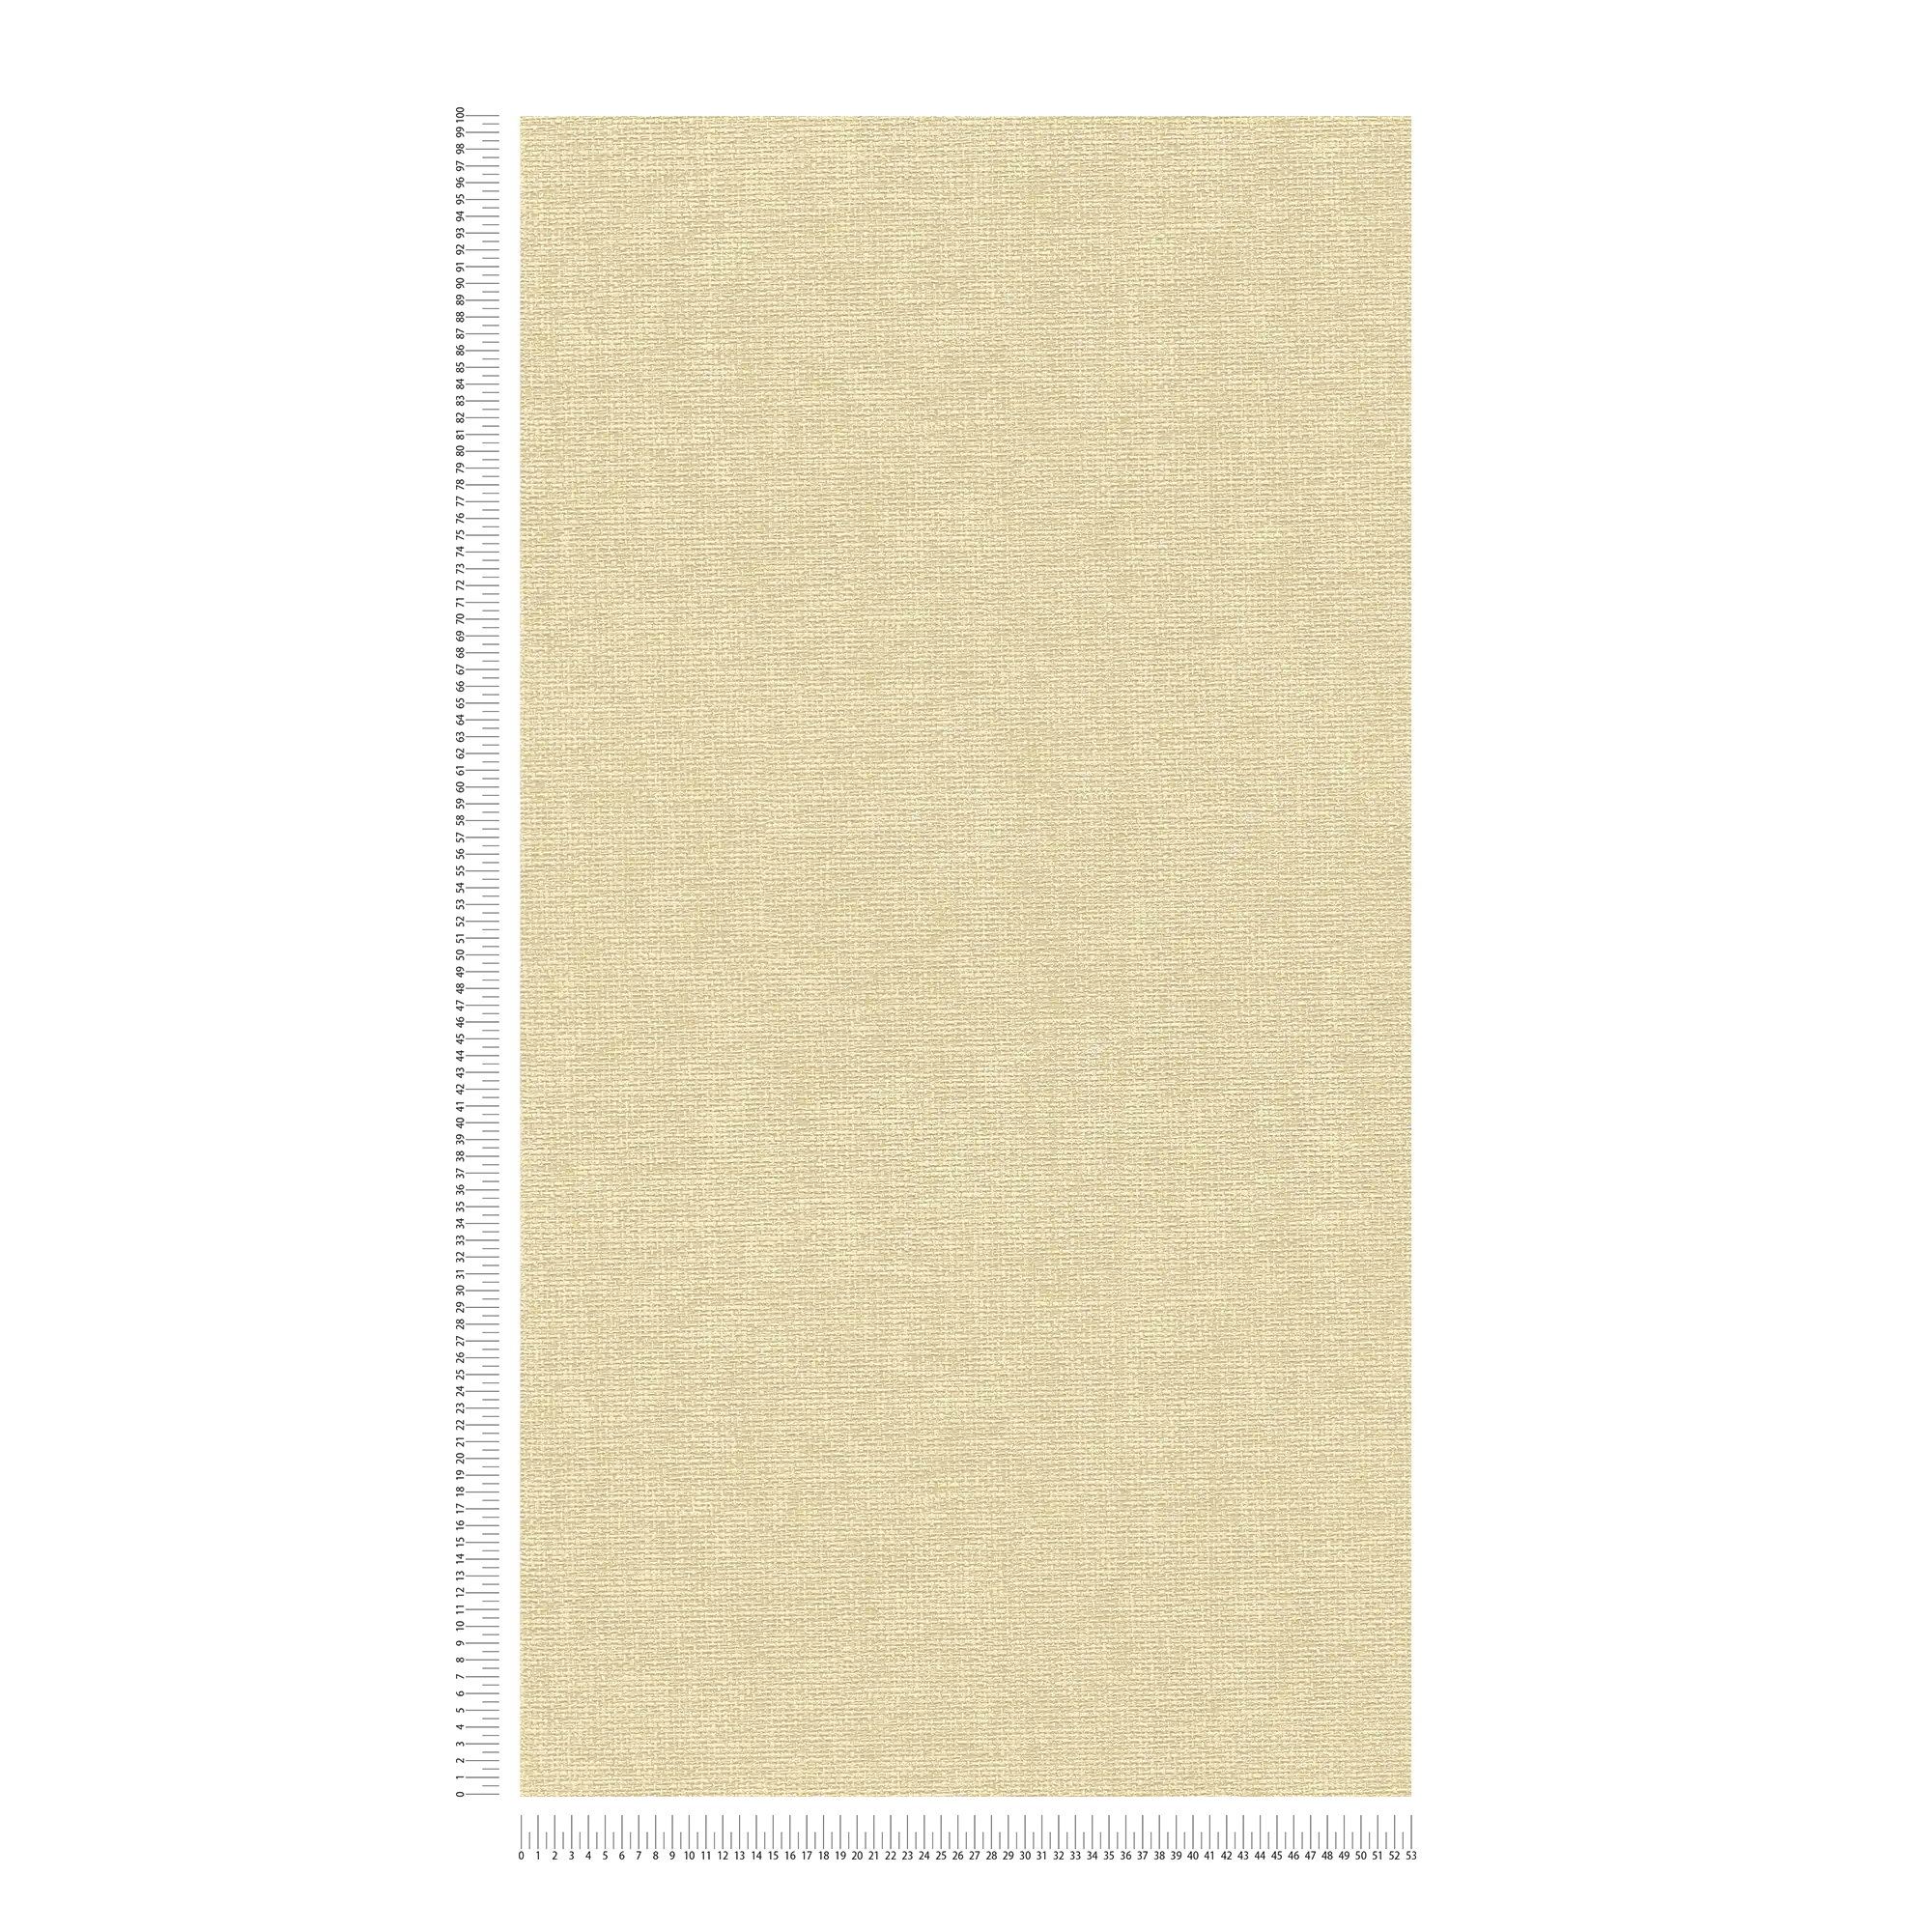             Carta da parati in tessuto in stile scandi - beige, giallo
        